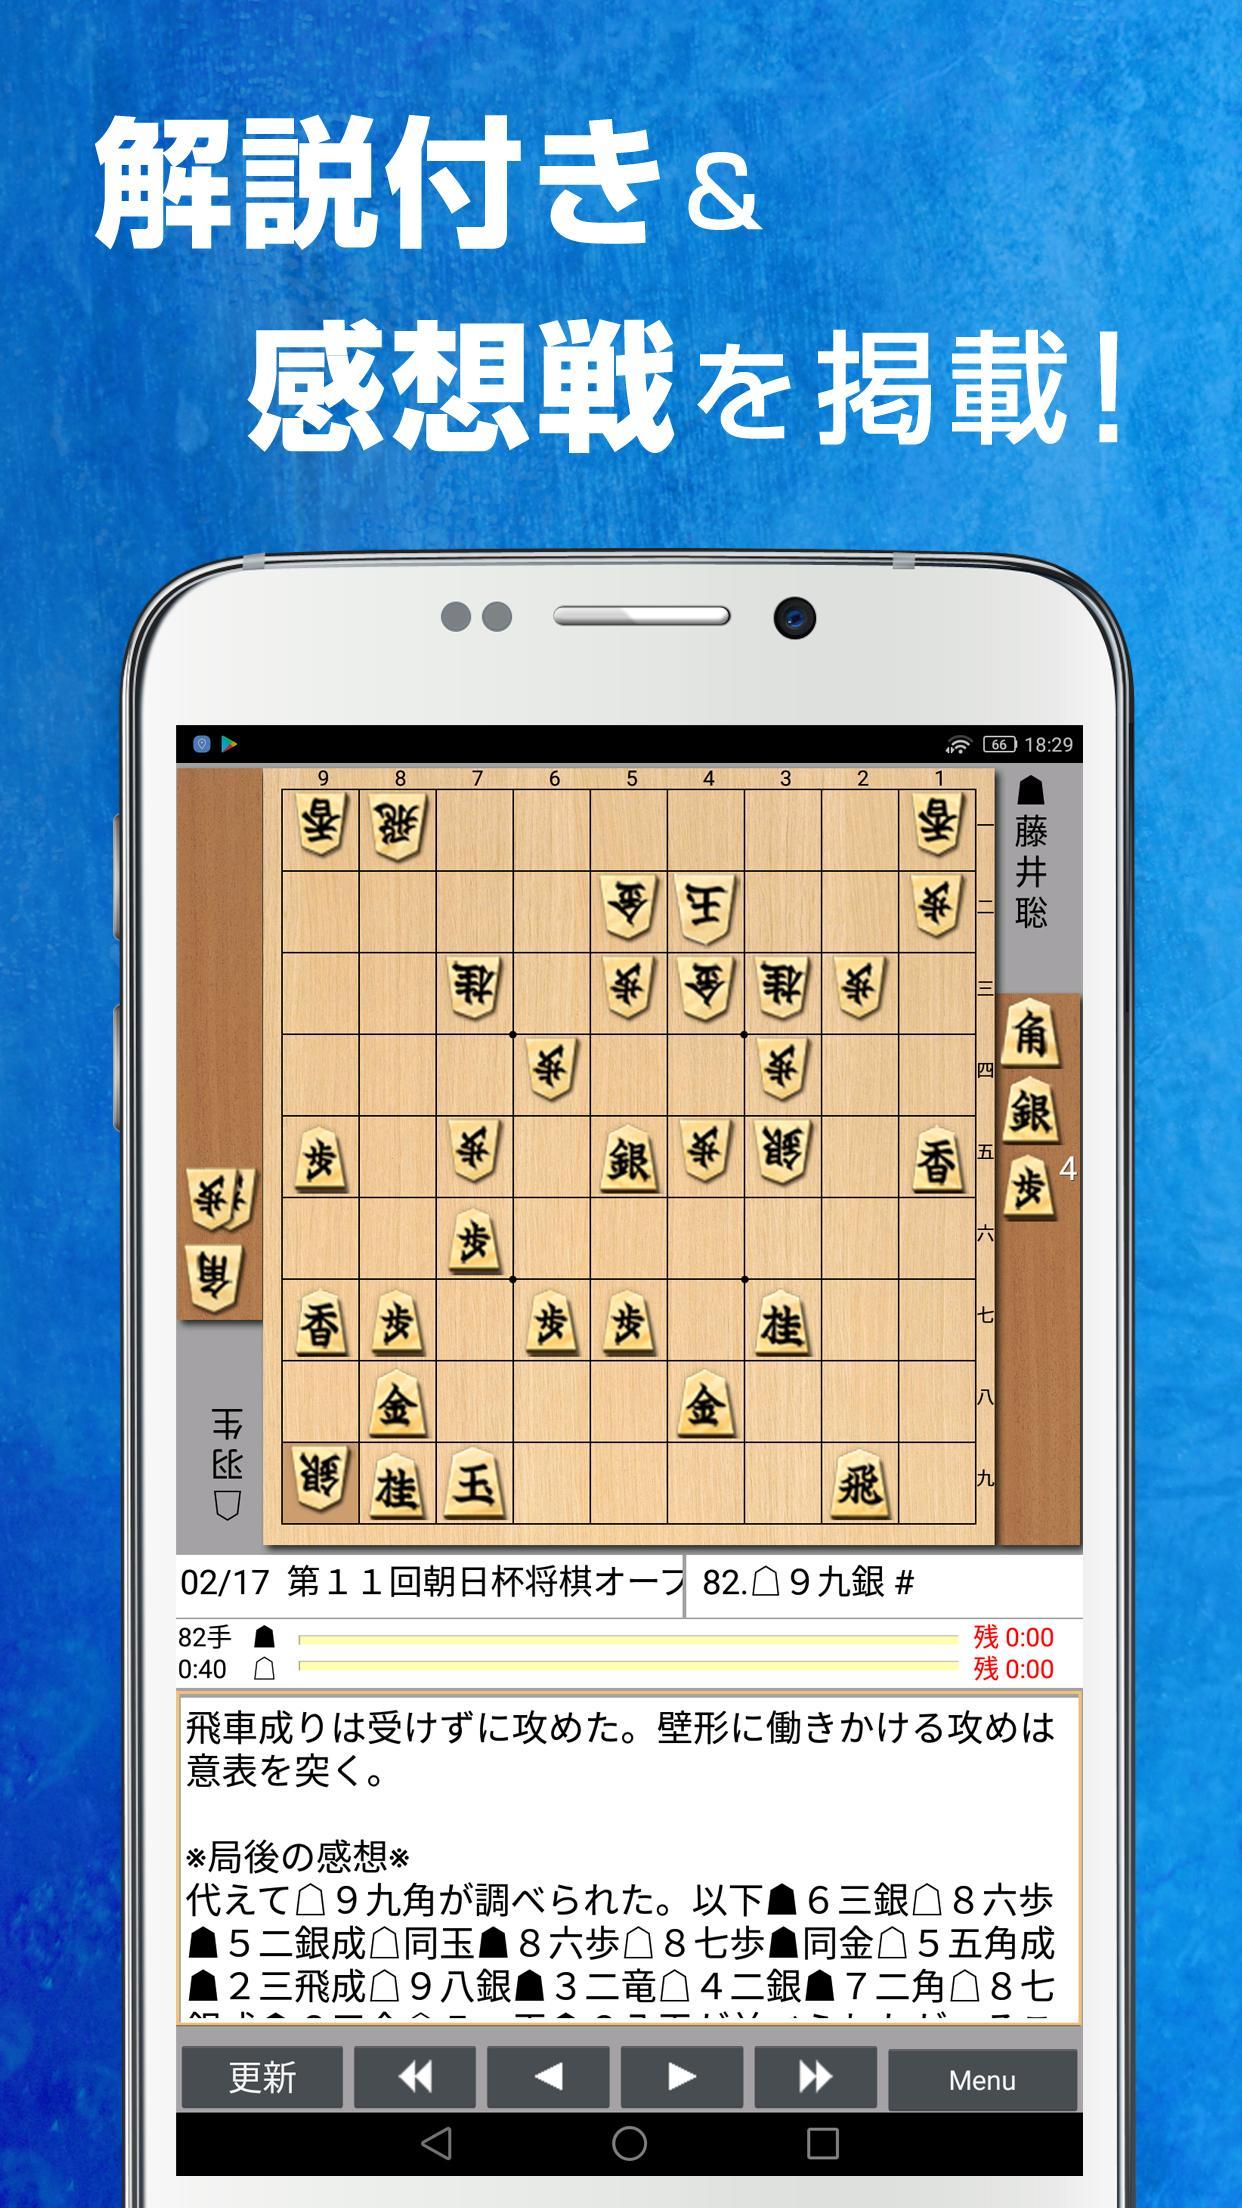 Shogi Live Subscription 2014 7.17 Screenshot 3